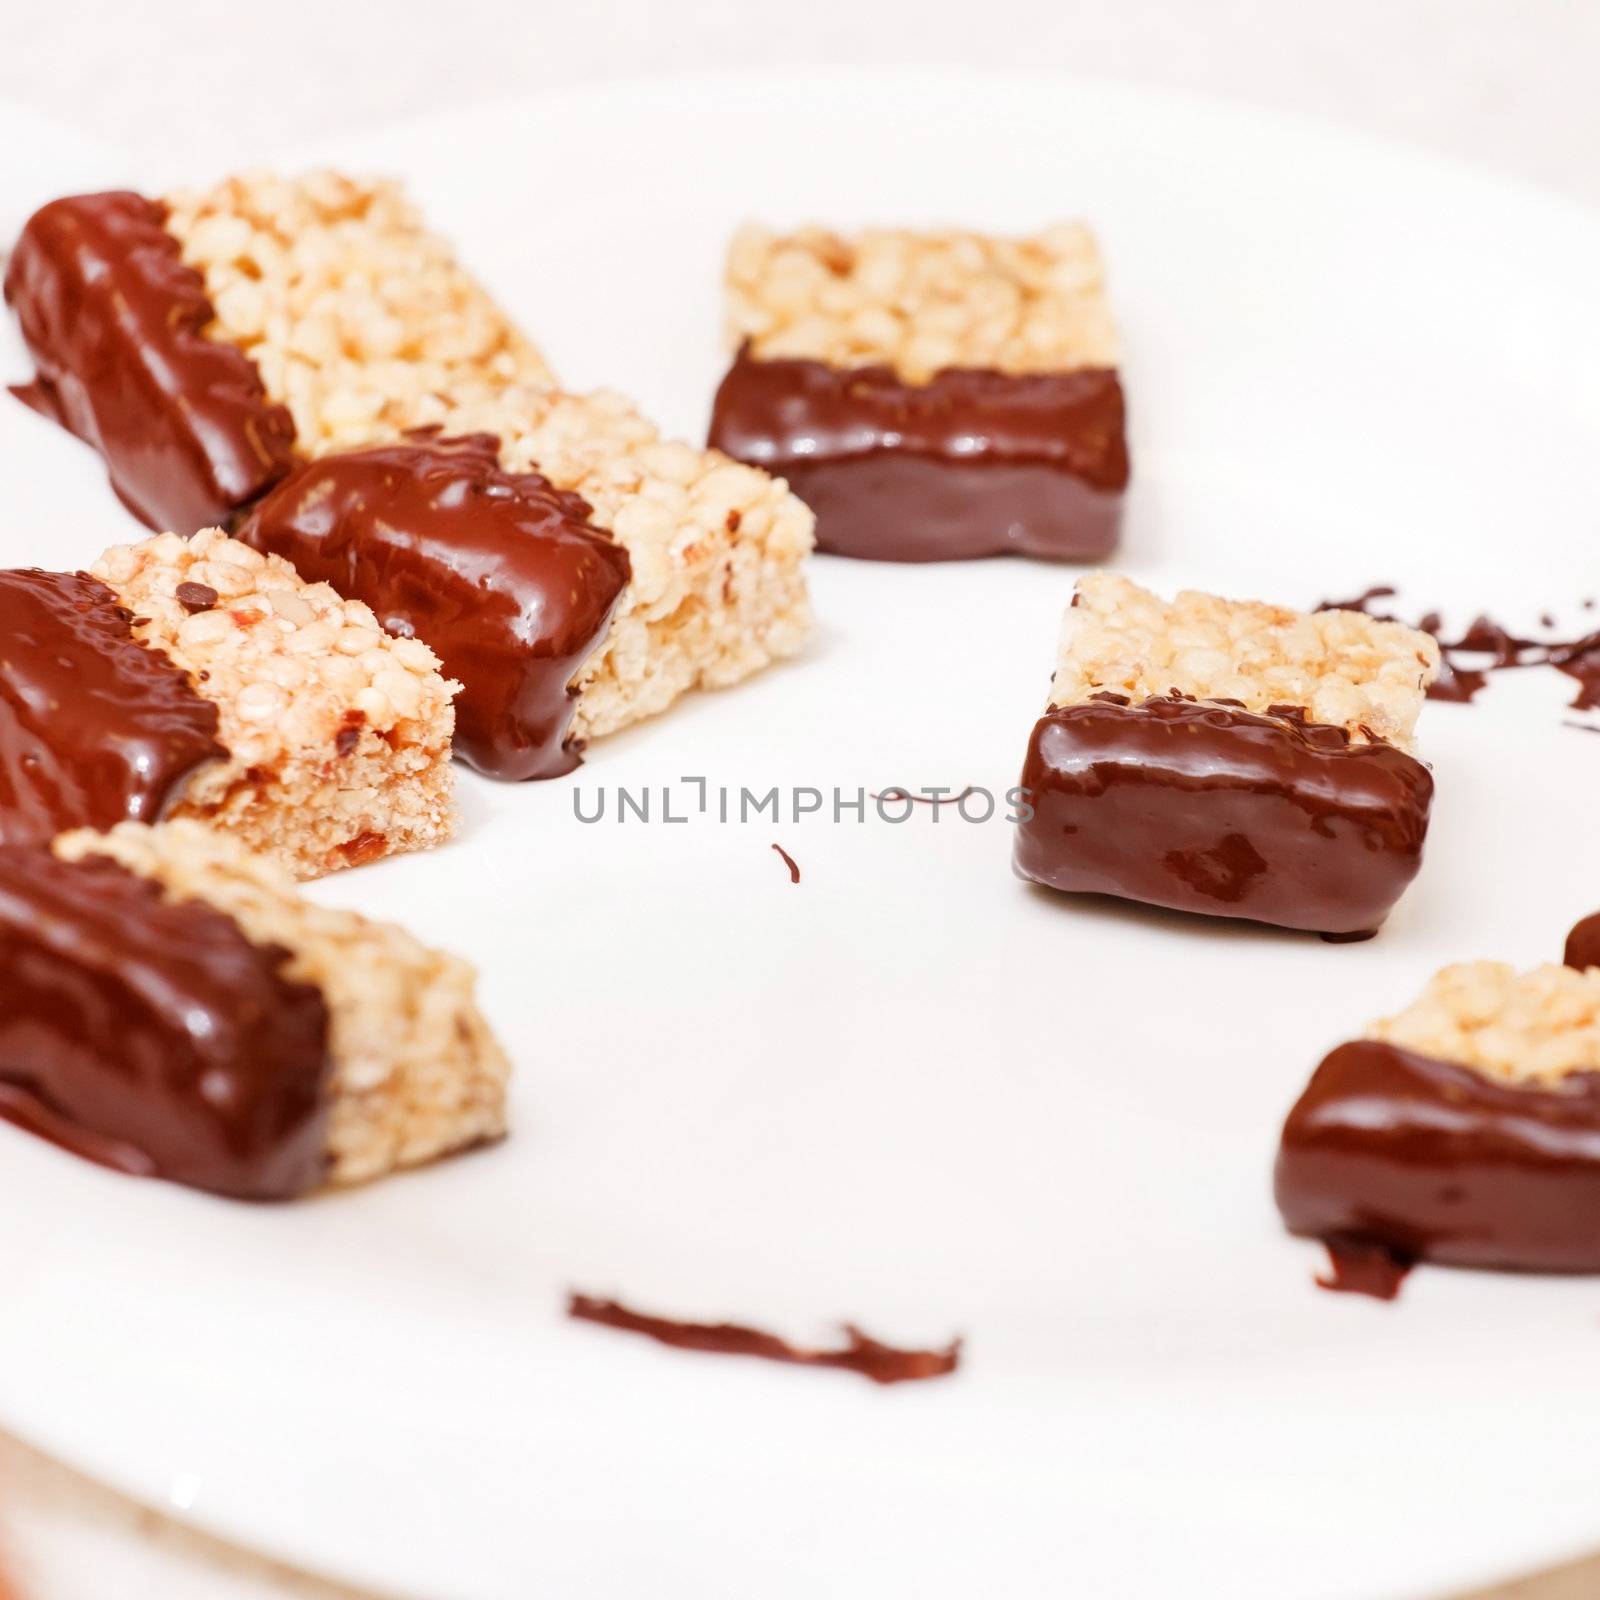 granola bars with chocolate